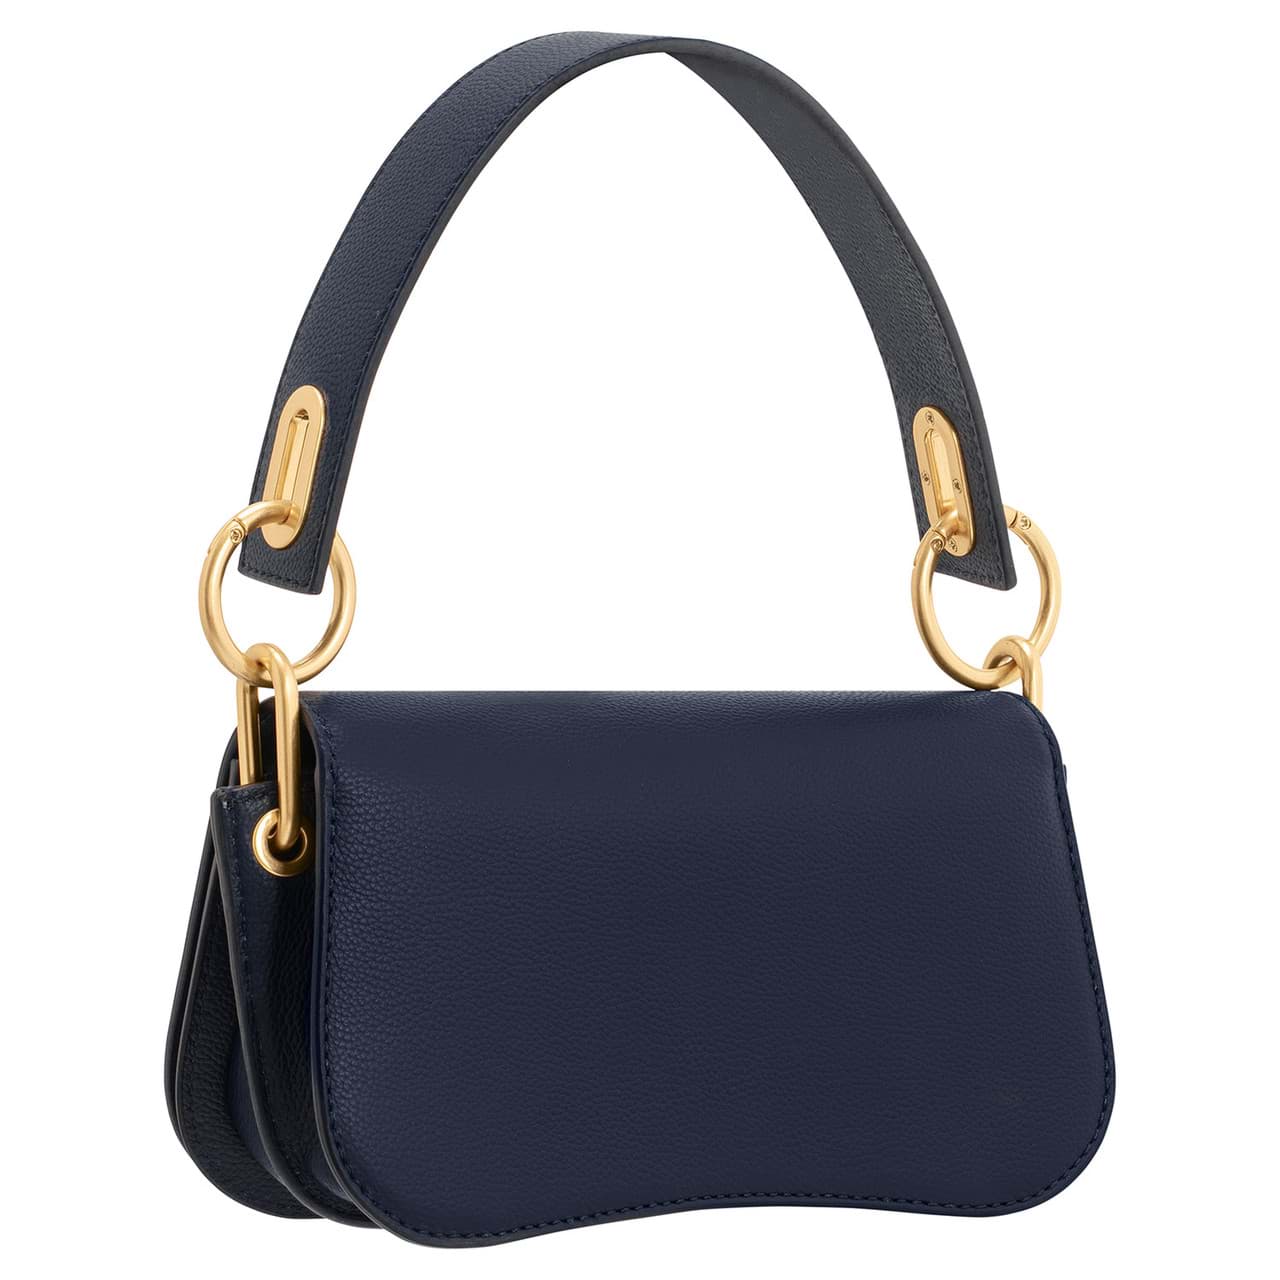 Oroton Outlet, Designer Women's Handbags